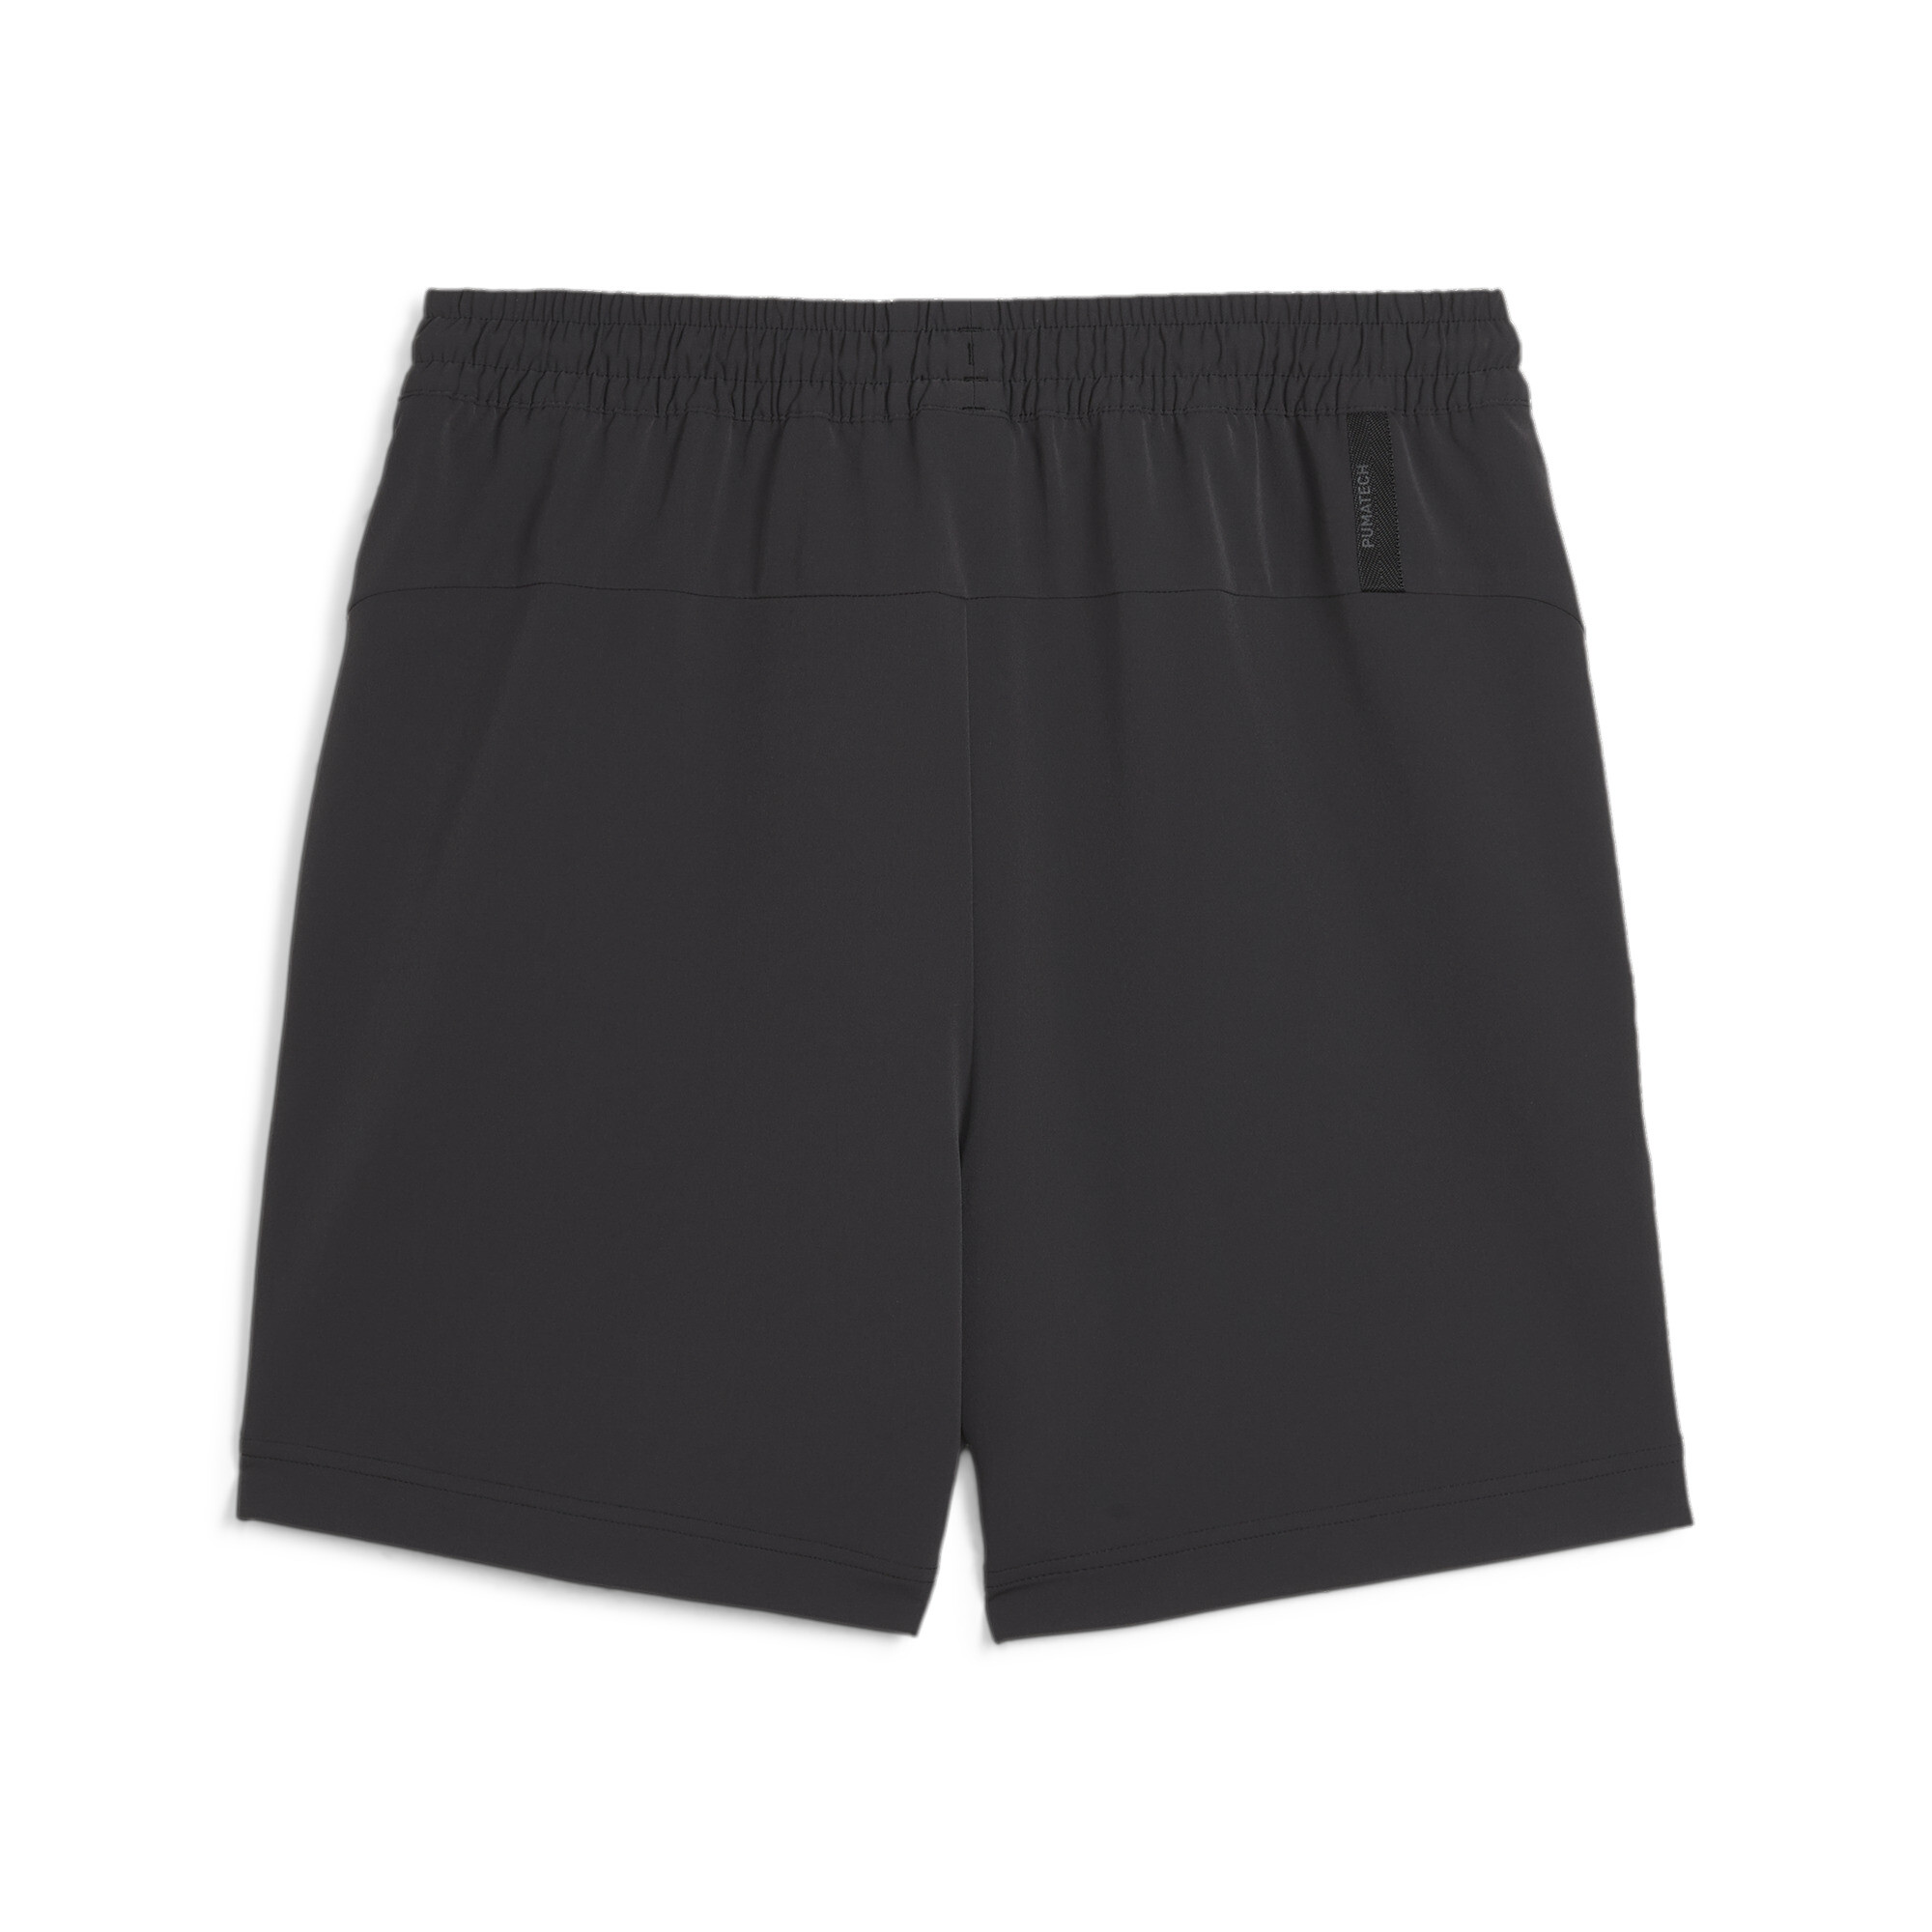 Men's PumaTECH's Shorts, Black, Size M, Clothing